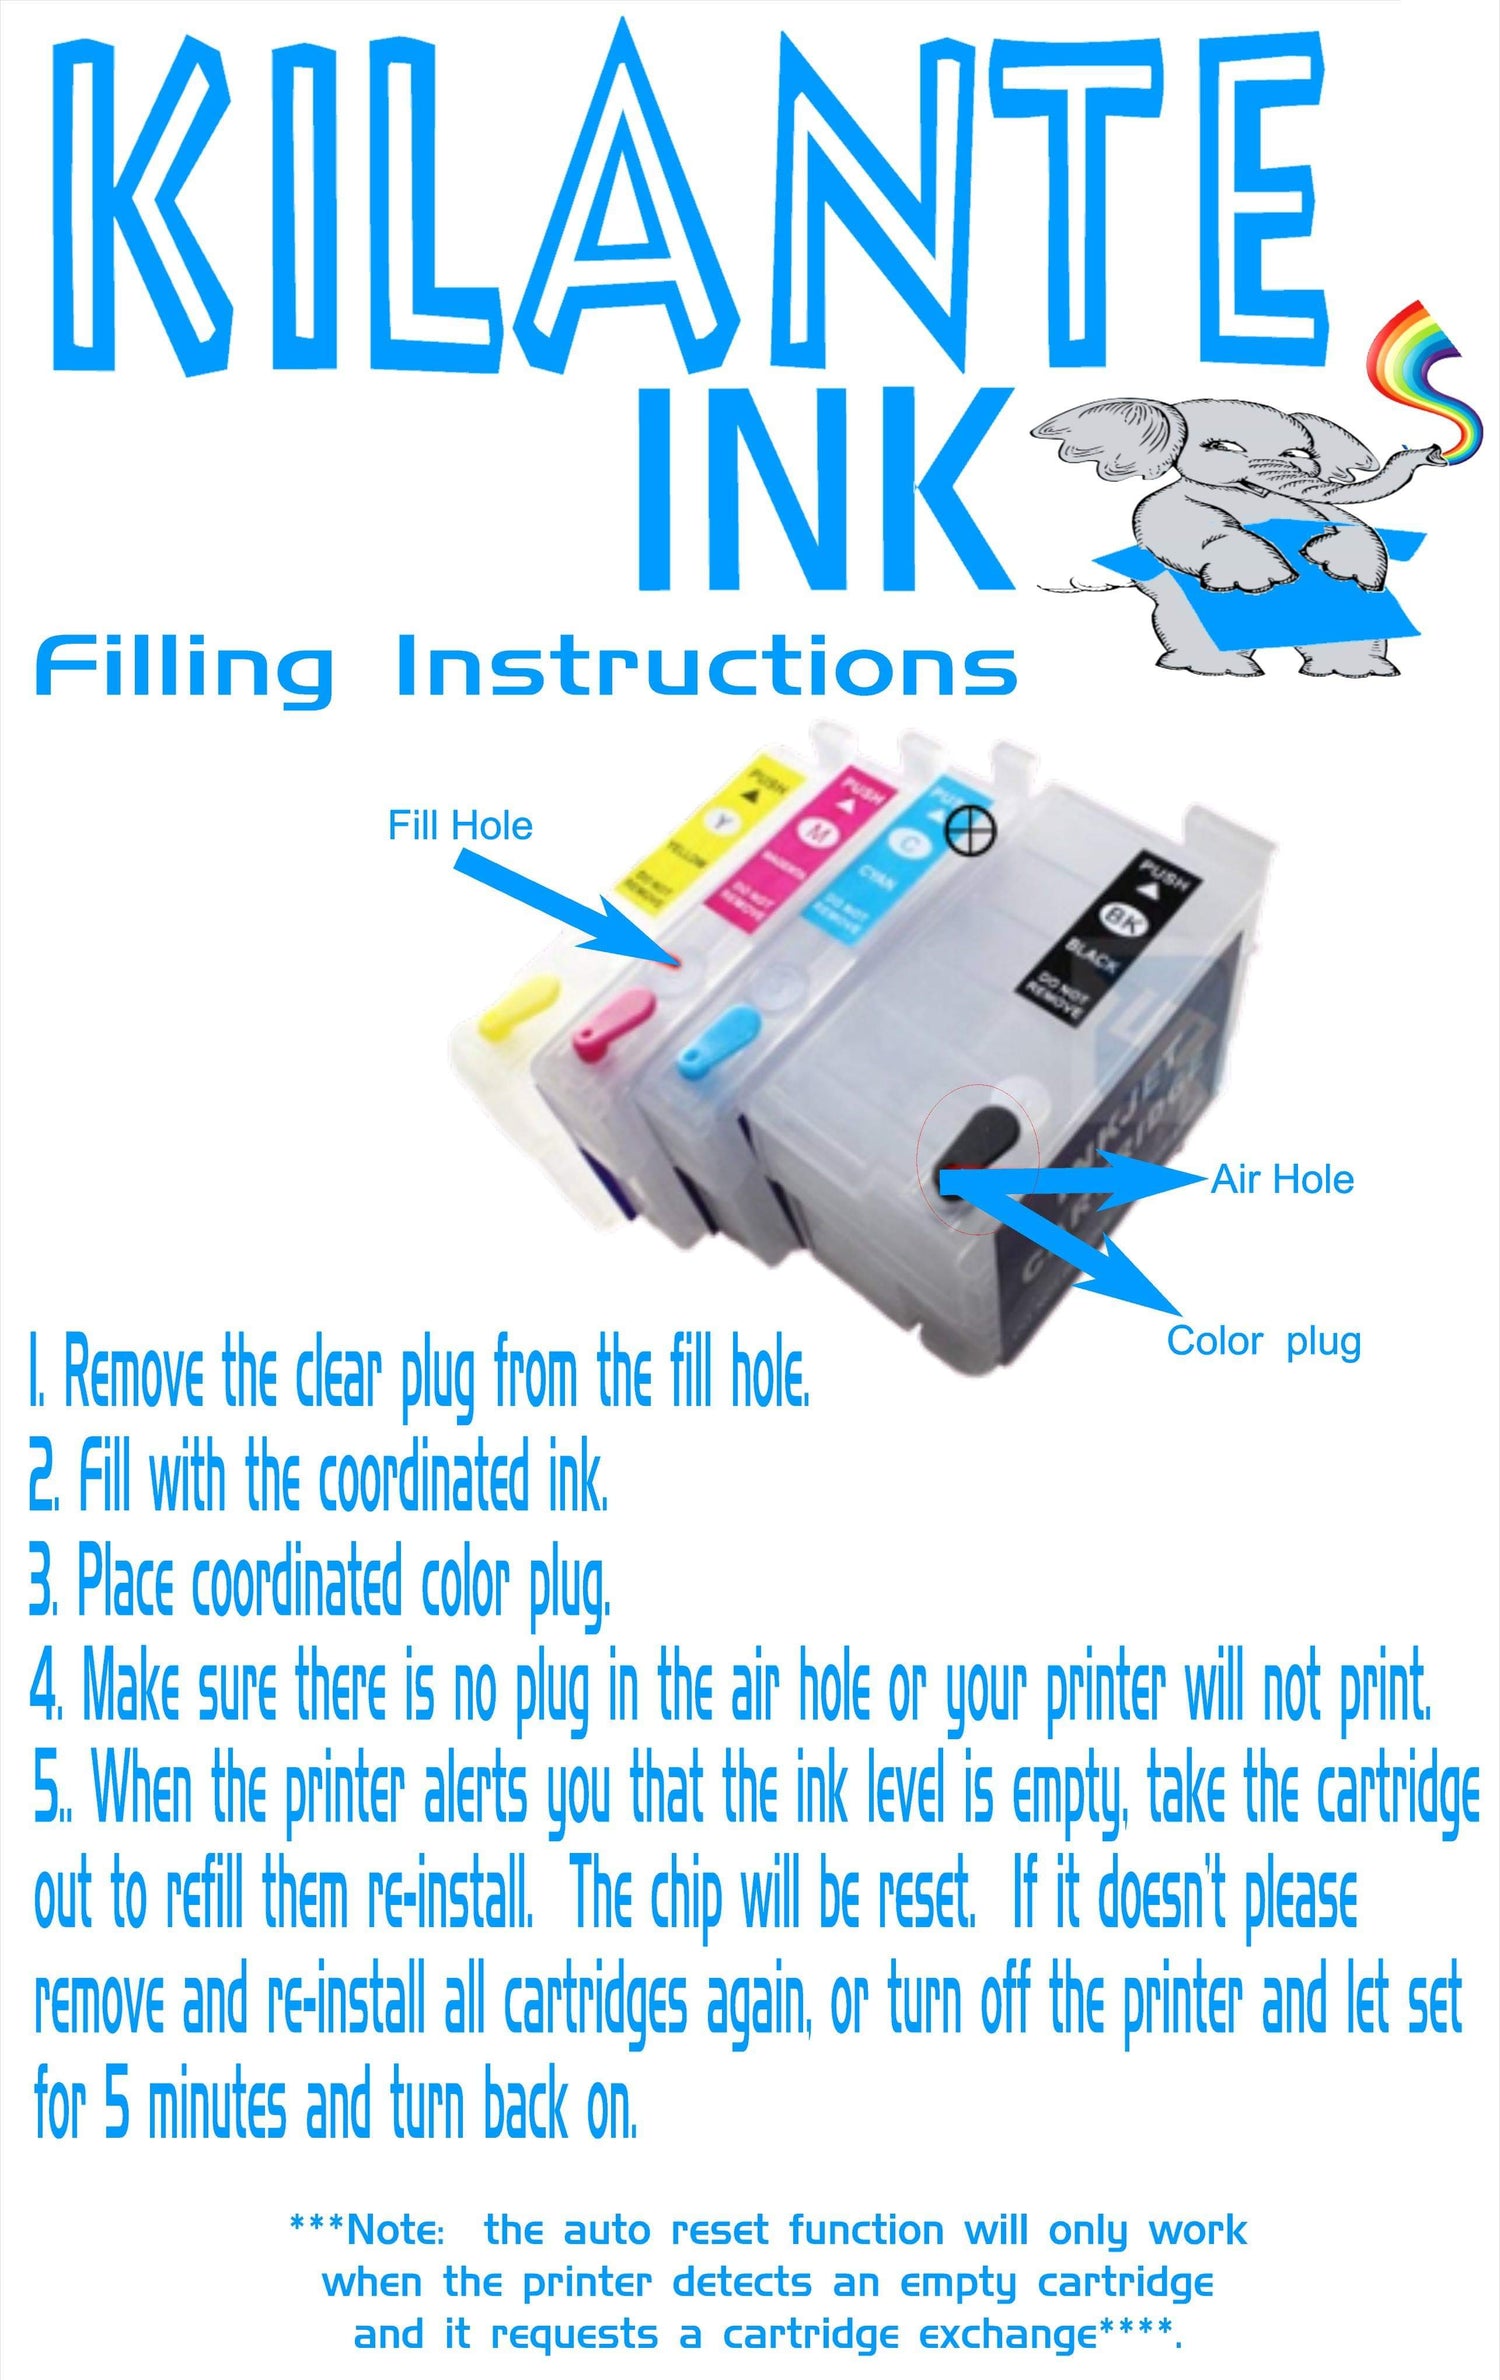 Refillable Ink Cartridges - Kilante Ink